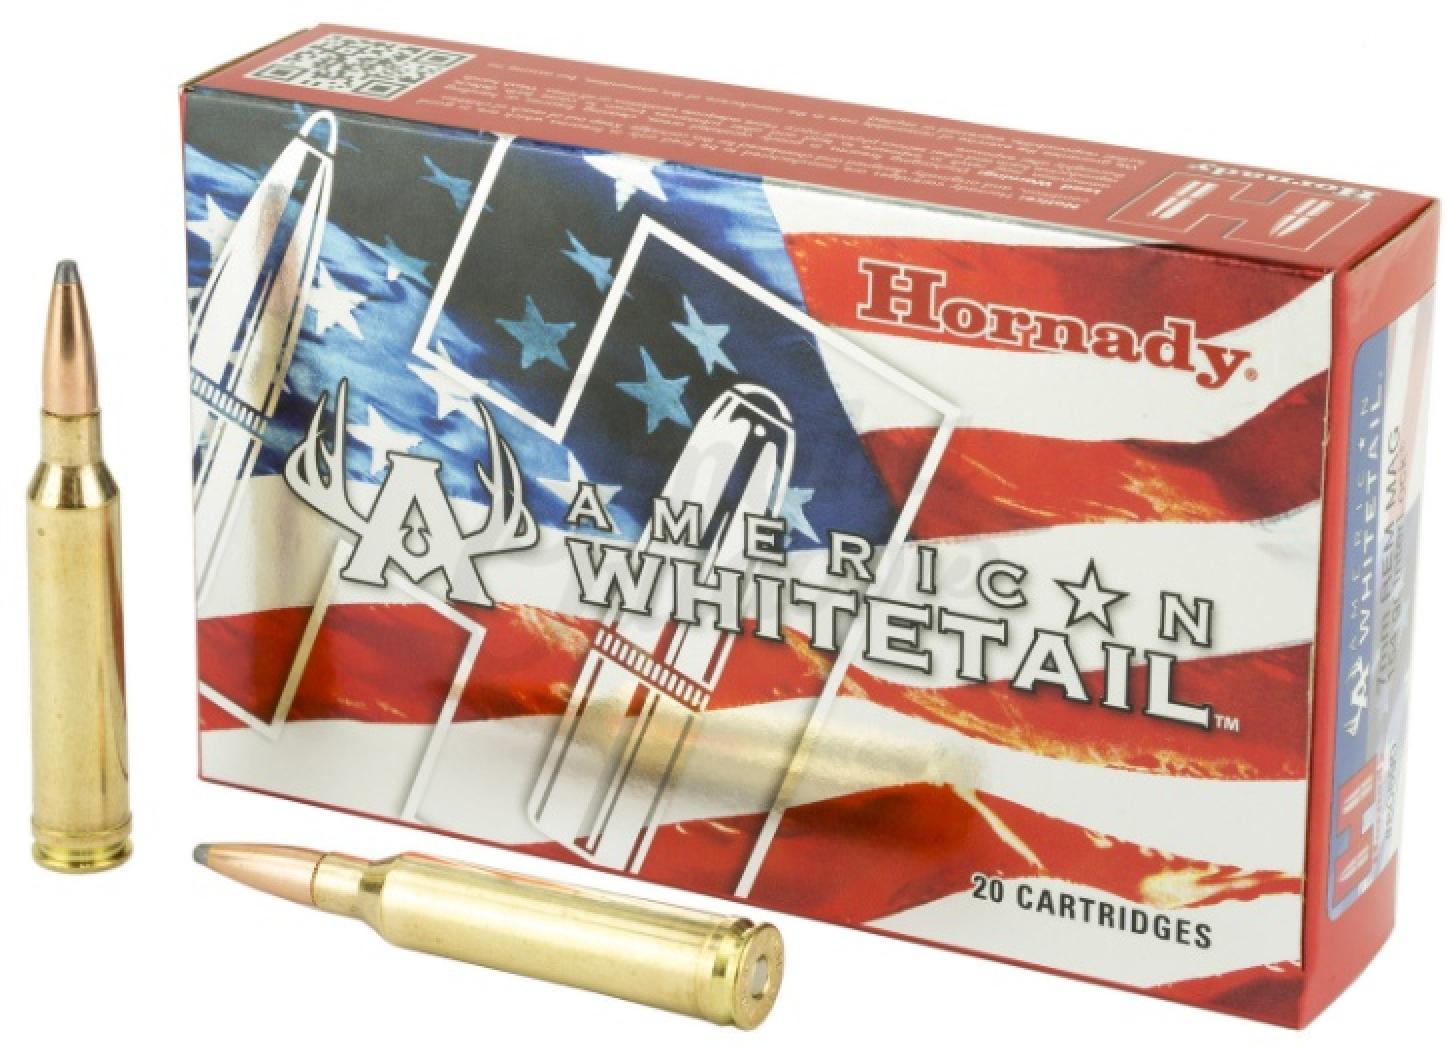 Hornady American Whitetail 7mm Remington Magnum 154 grain InterLock SP